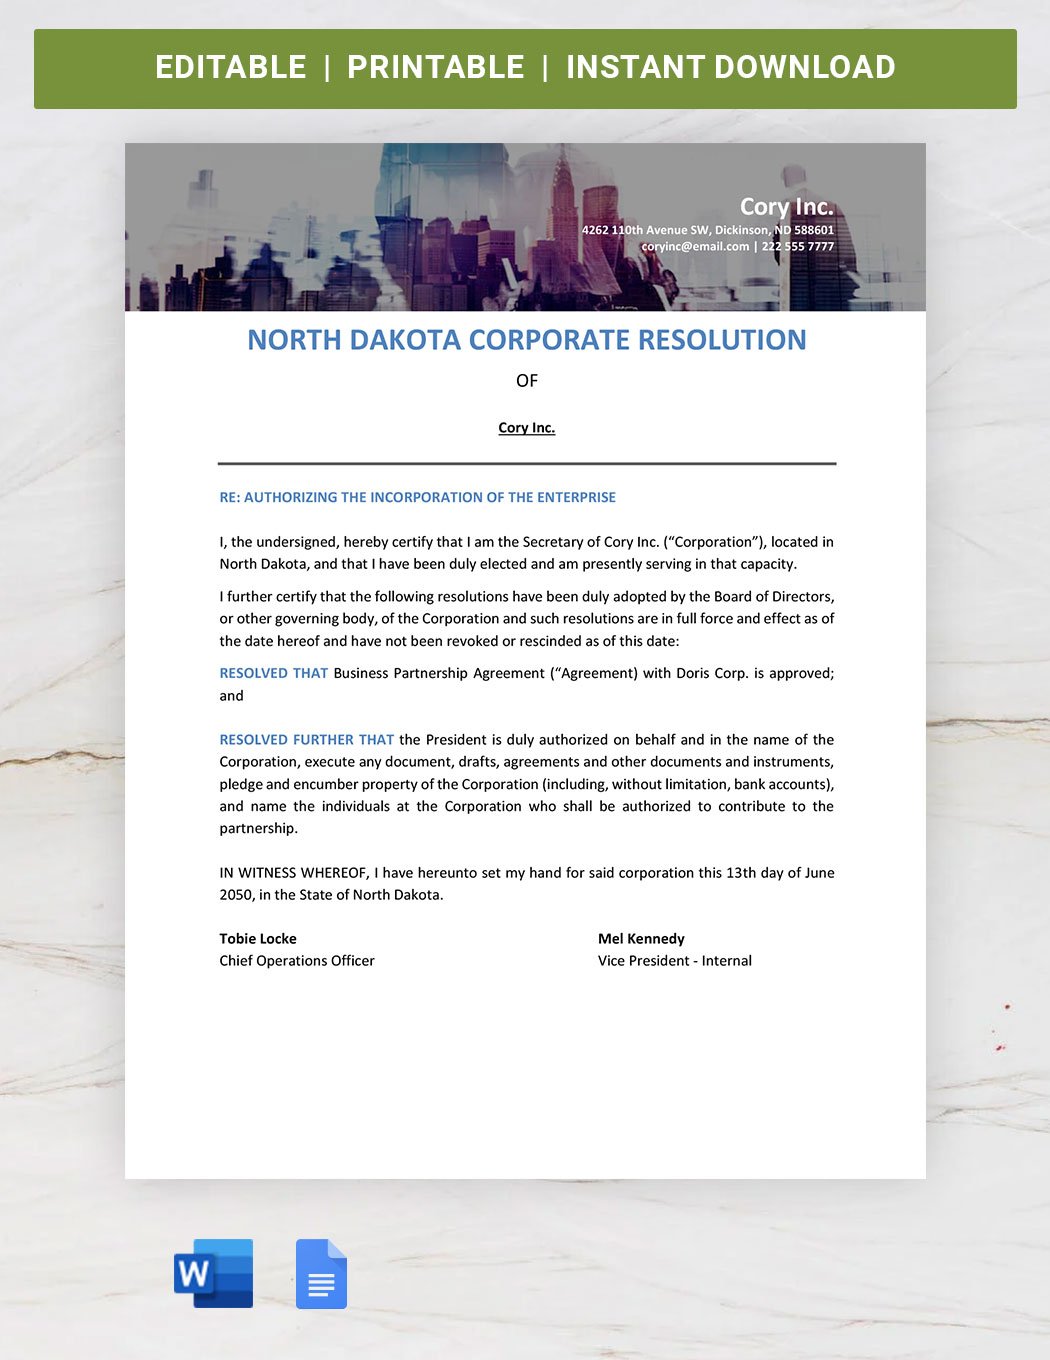 North Dakota Corporate Resolution Template in Word, Google Docs